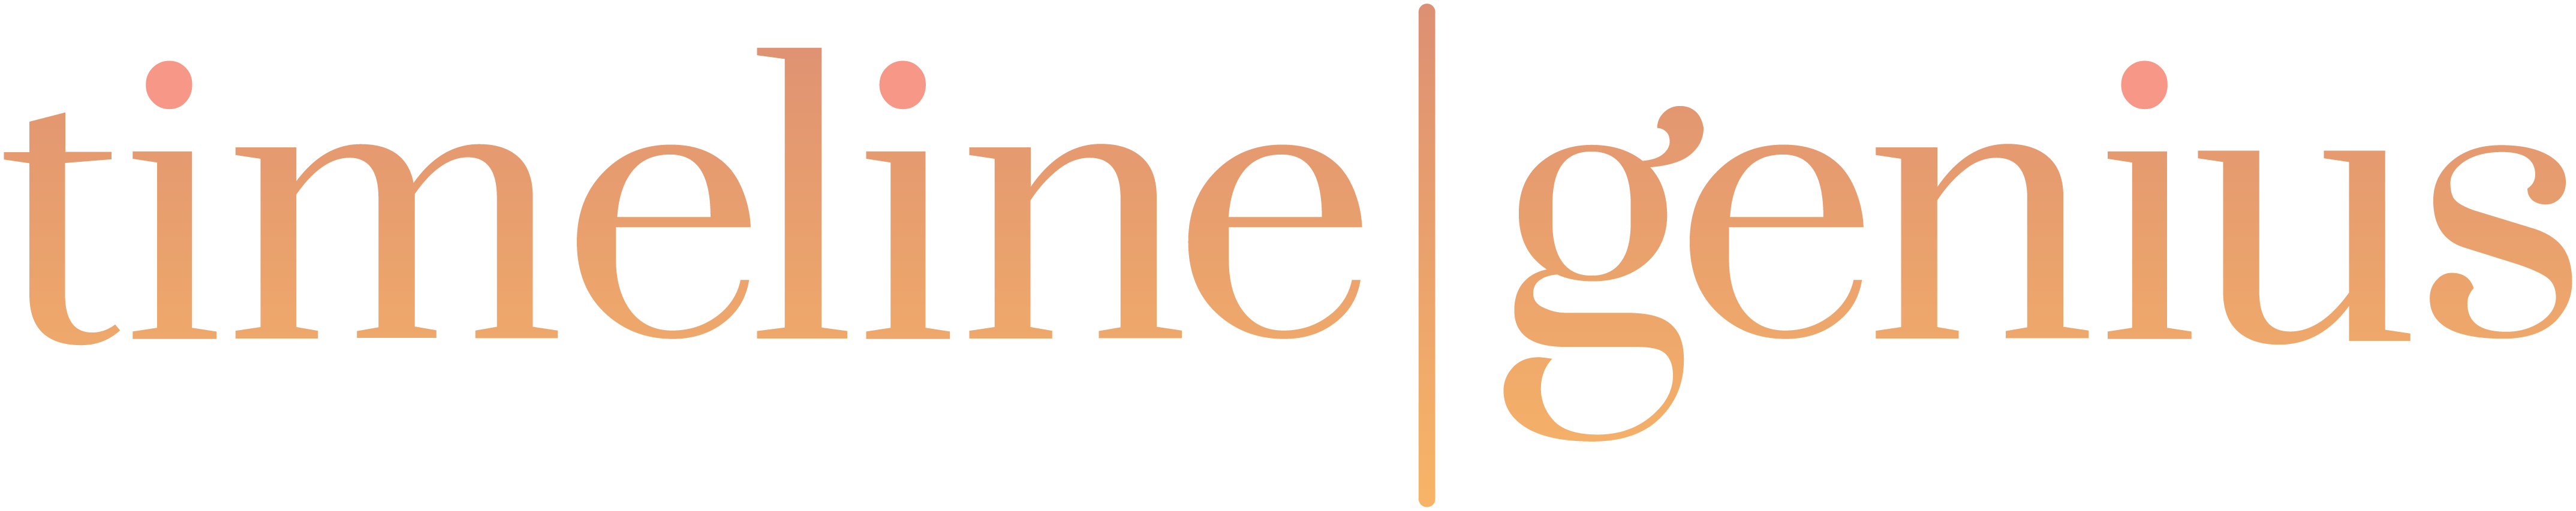 321-tg-coral-logo-2021-1.png